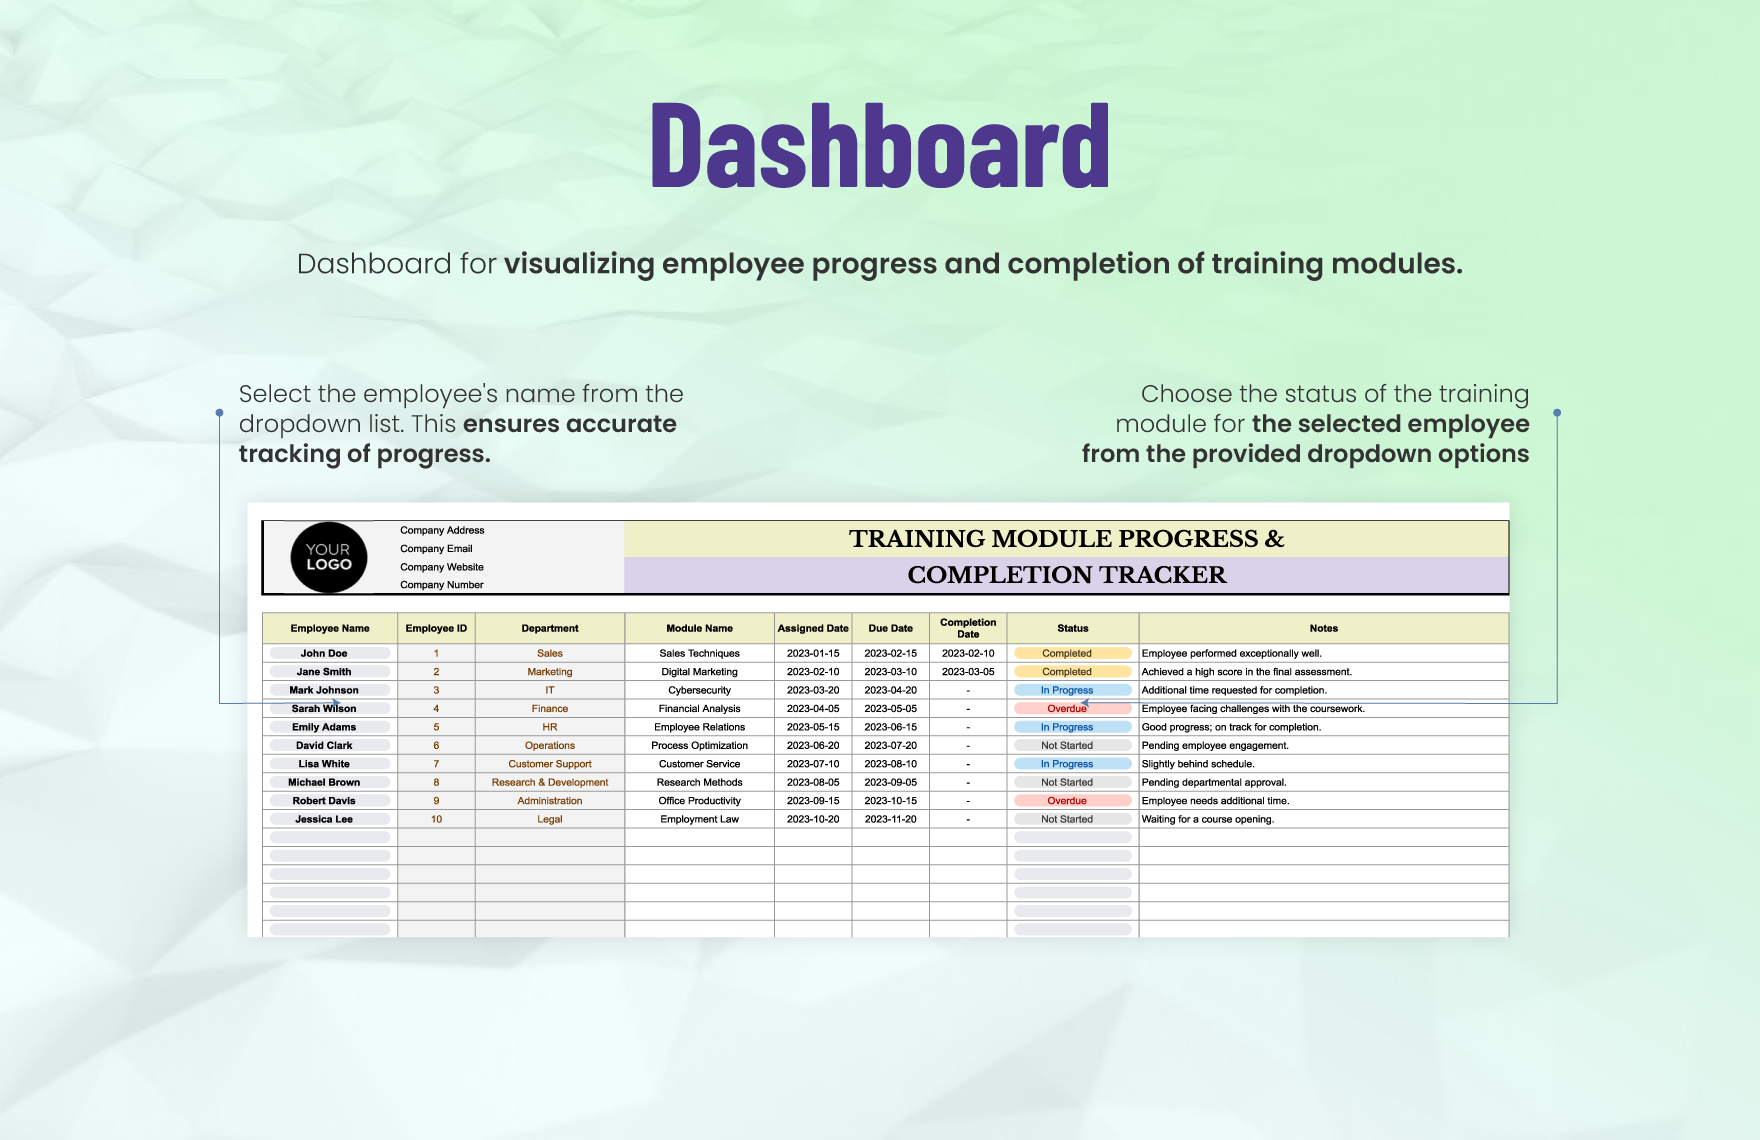 Training Module Progress & Completion Tracker HR Template